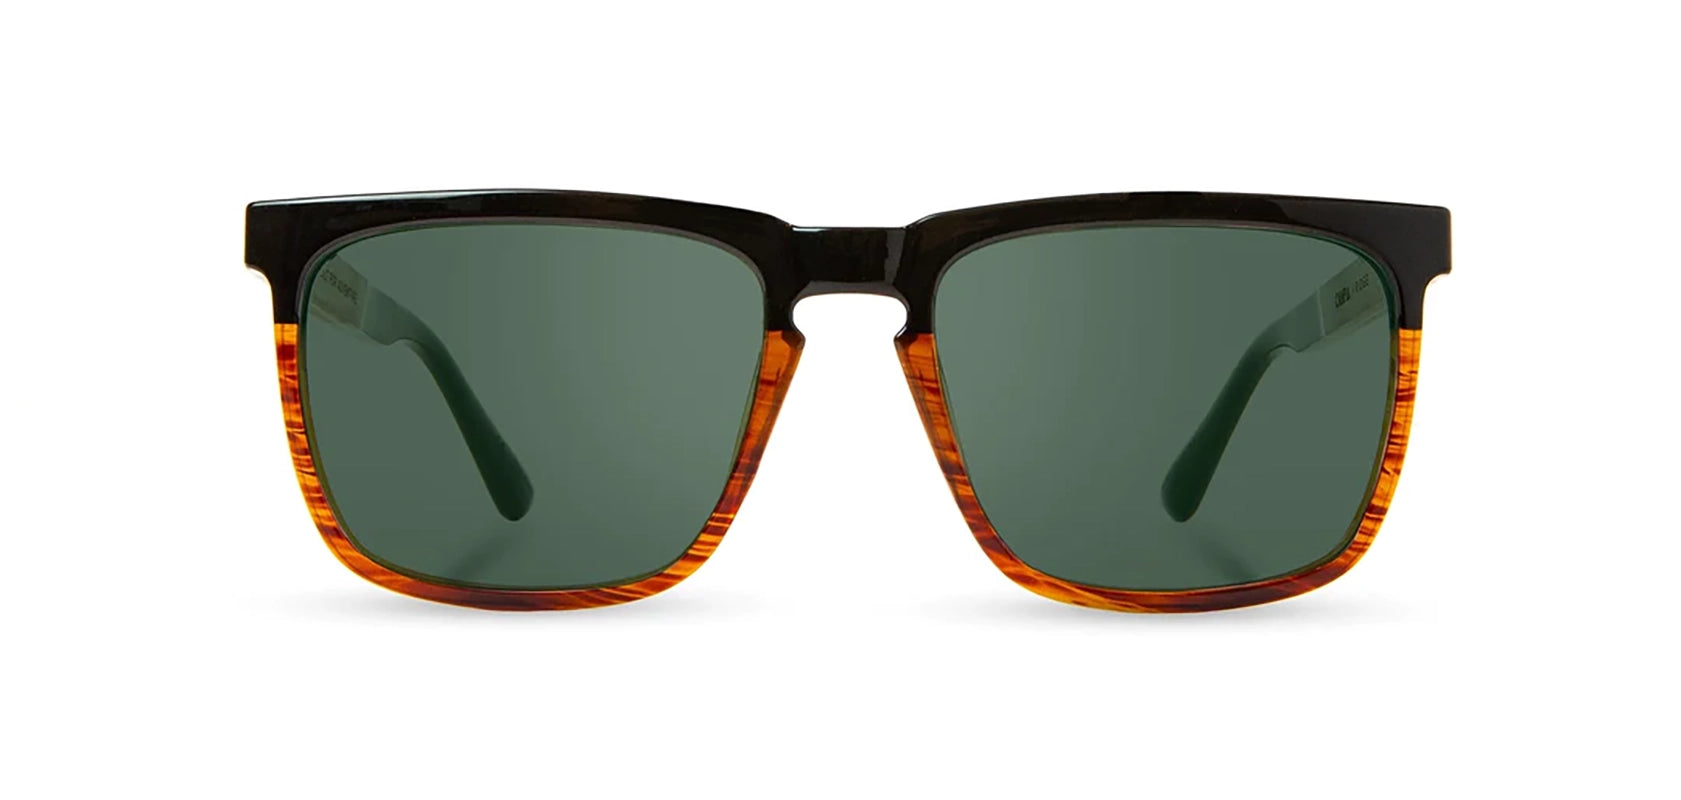 Camp Ridge Sunglasses in Black/Tortoise/Walnut frames, with Basic G15 polarized lenses, Front  view